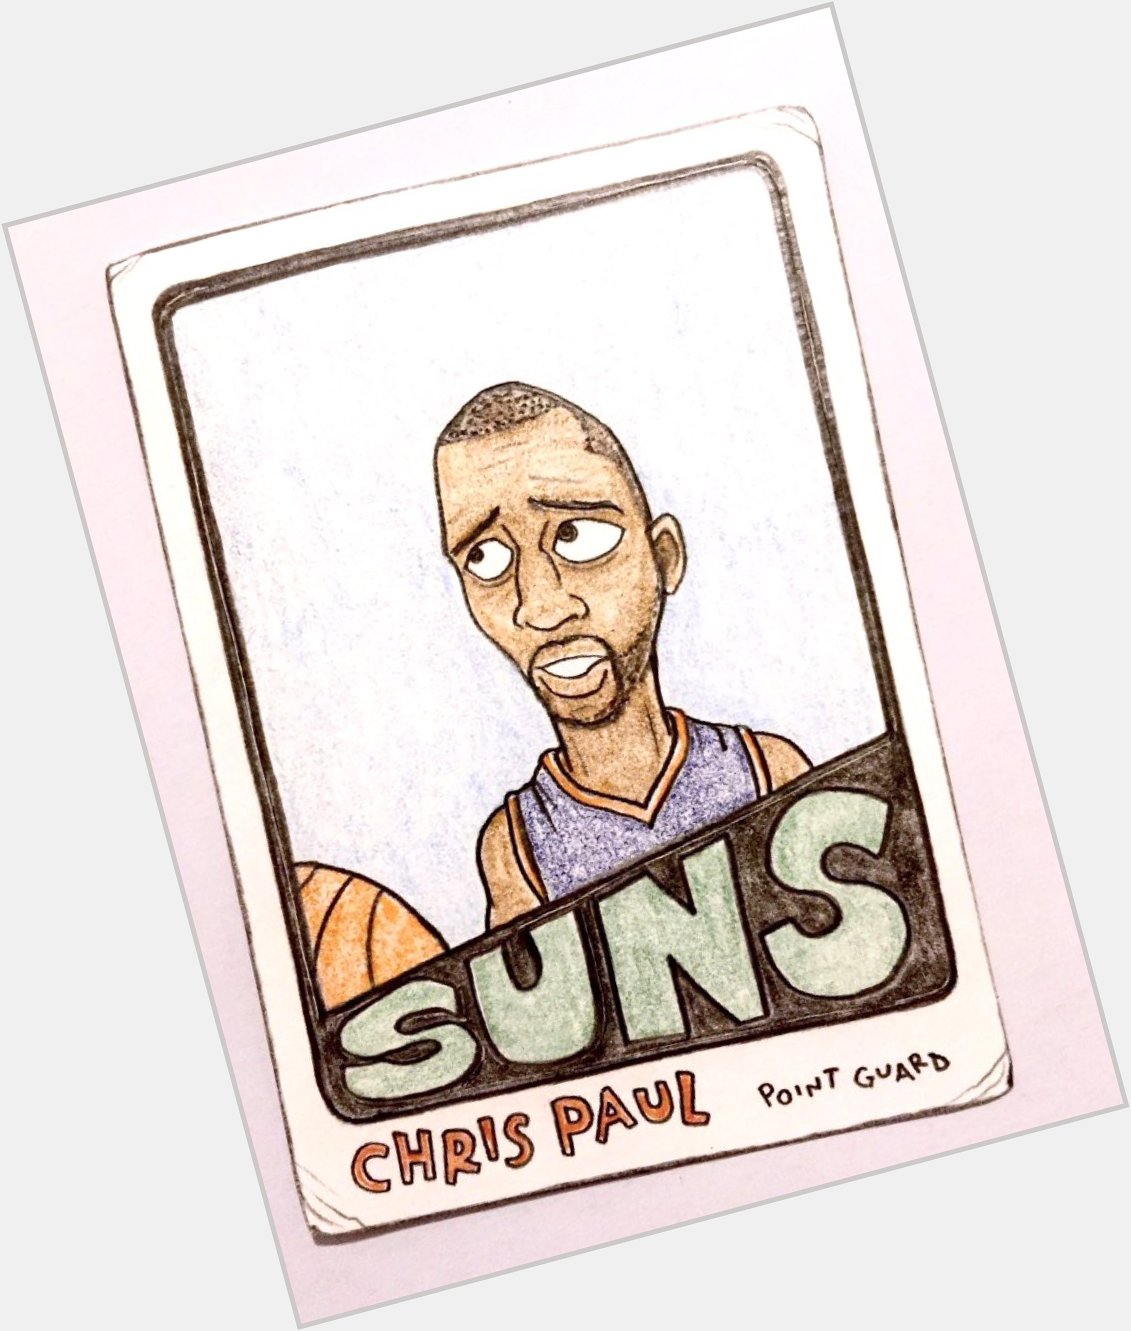 Happy birthday, Chris Paul! 